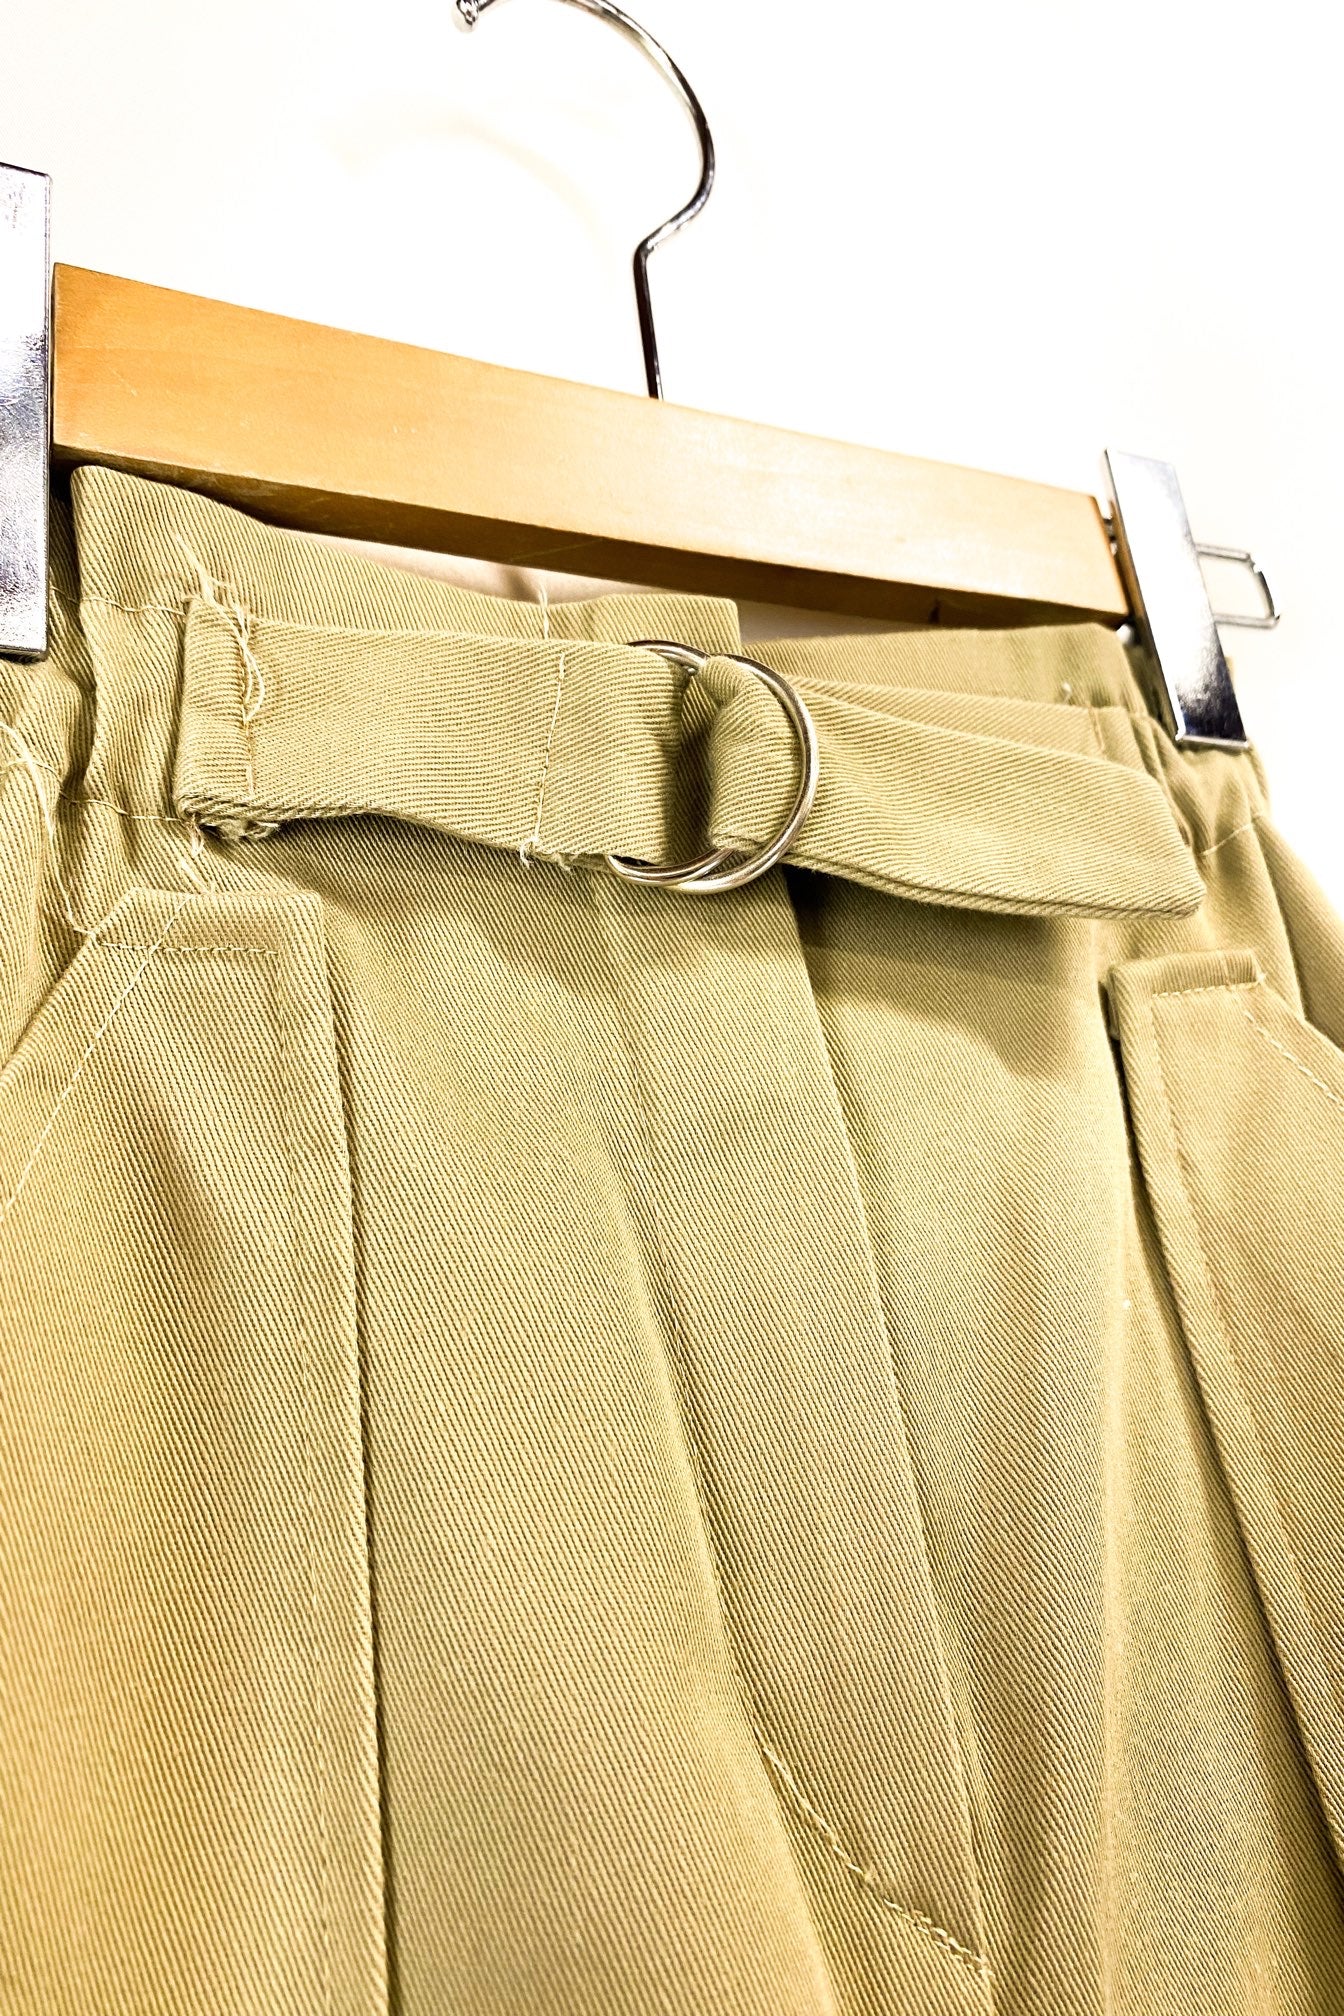 80's Military Gurkha pants talon zip